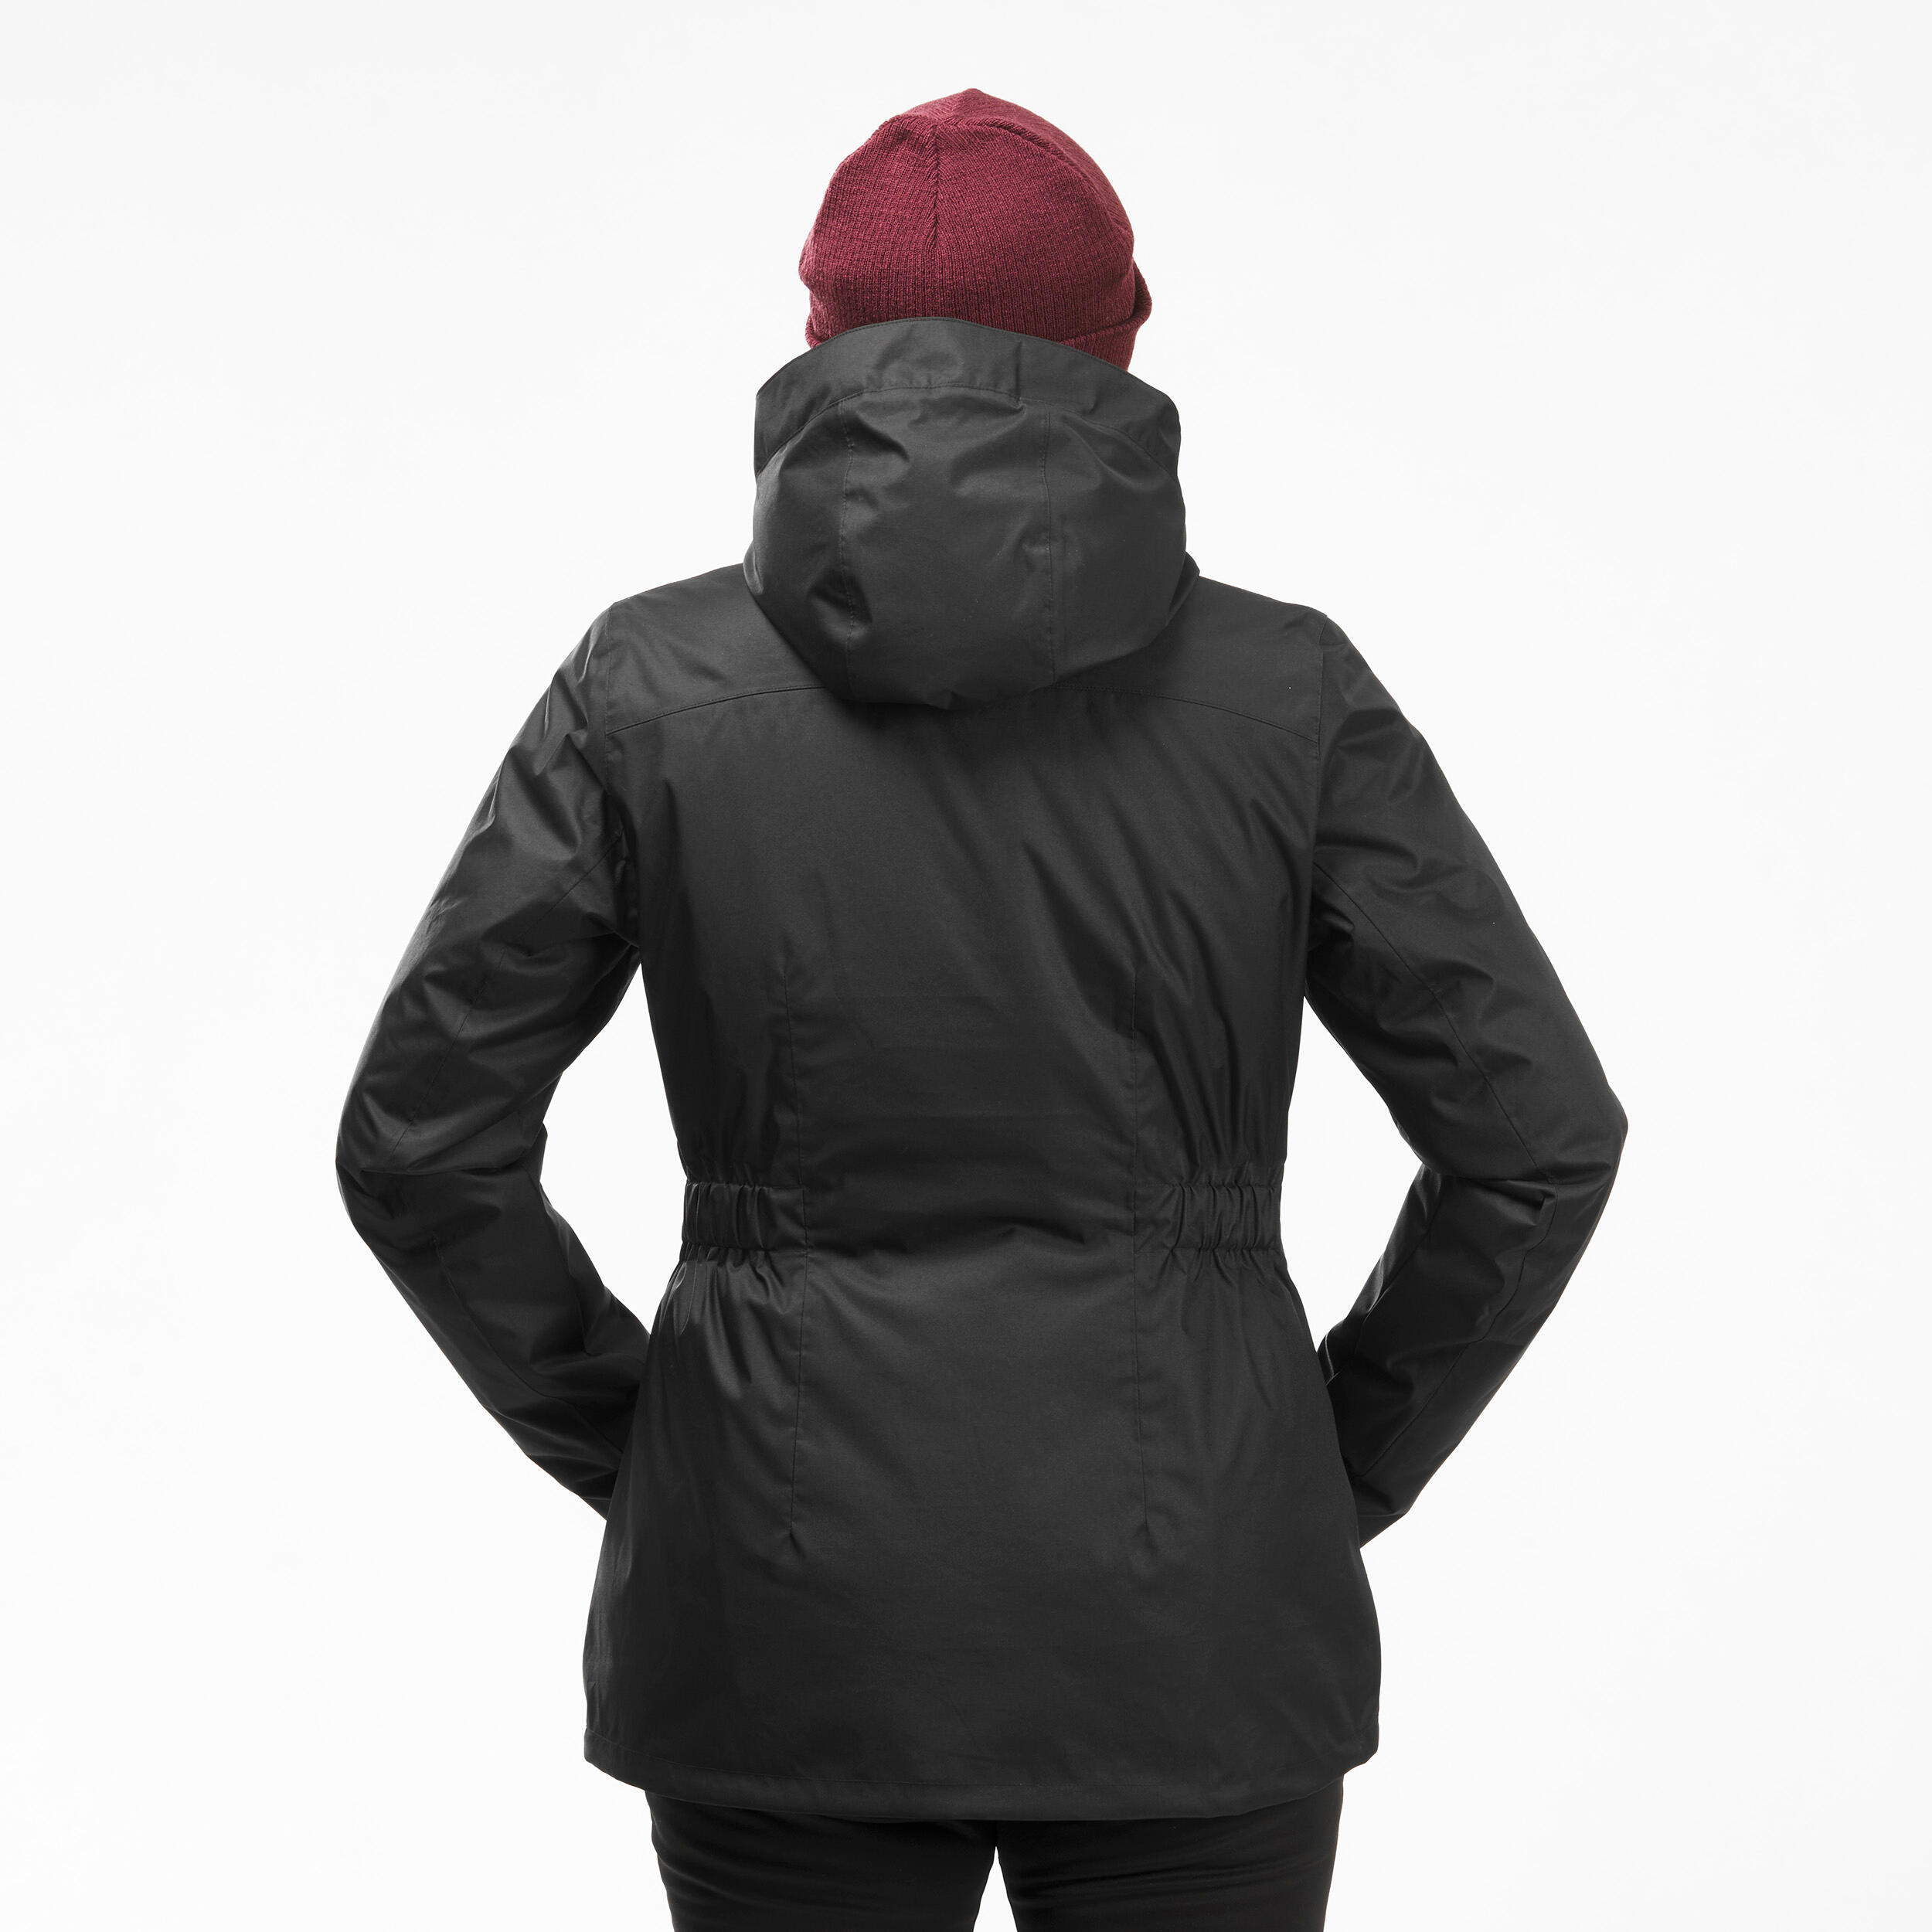 Women's Winter Jacket - SH 500 Black - black - Quechua - Decathlon